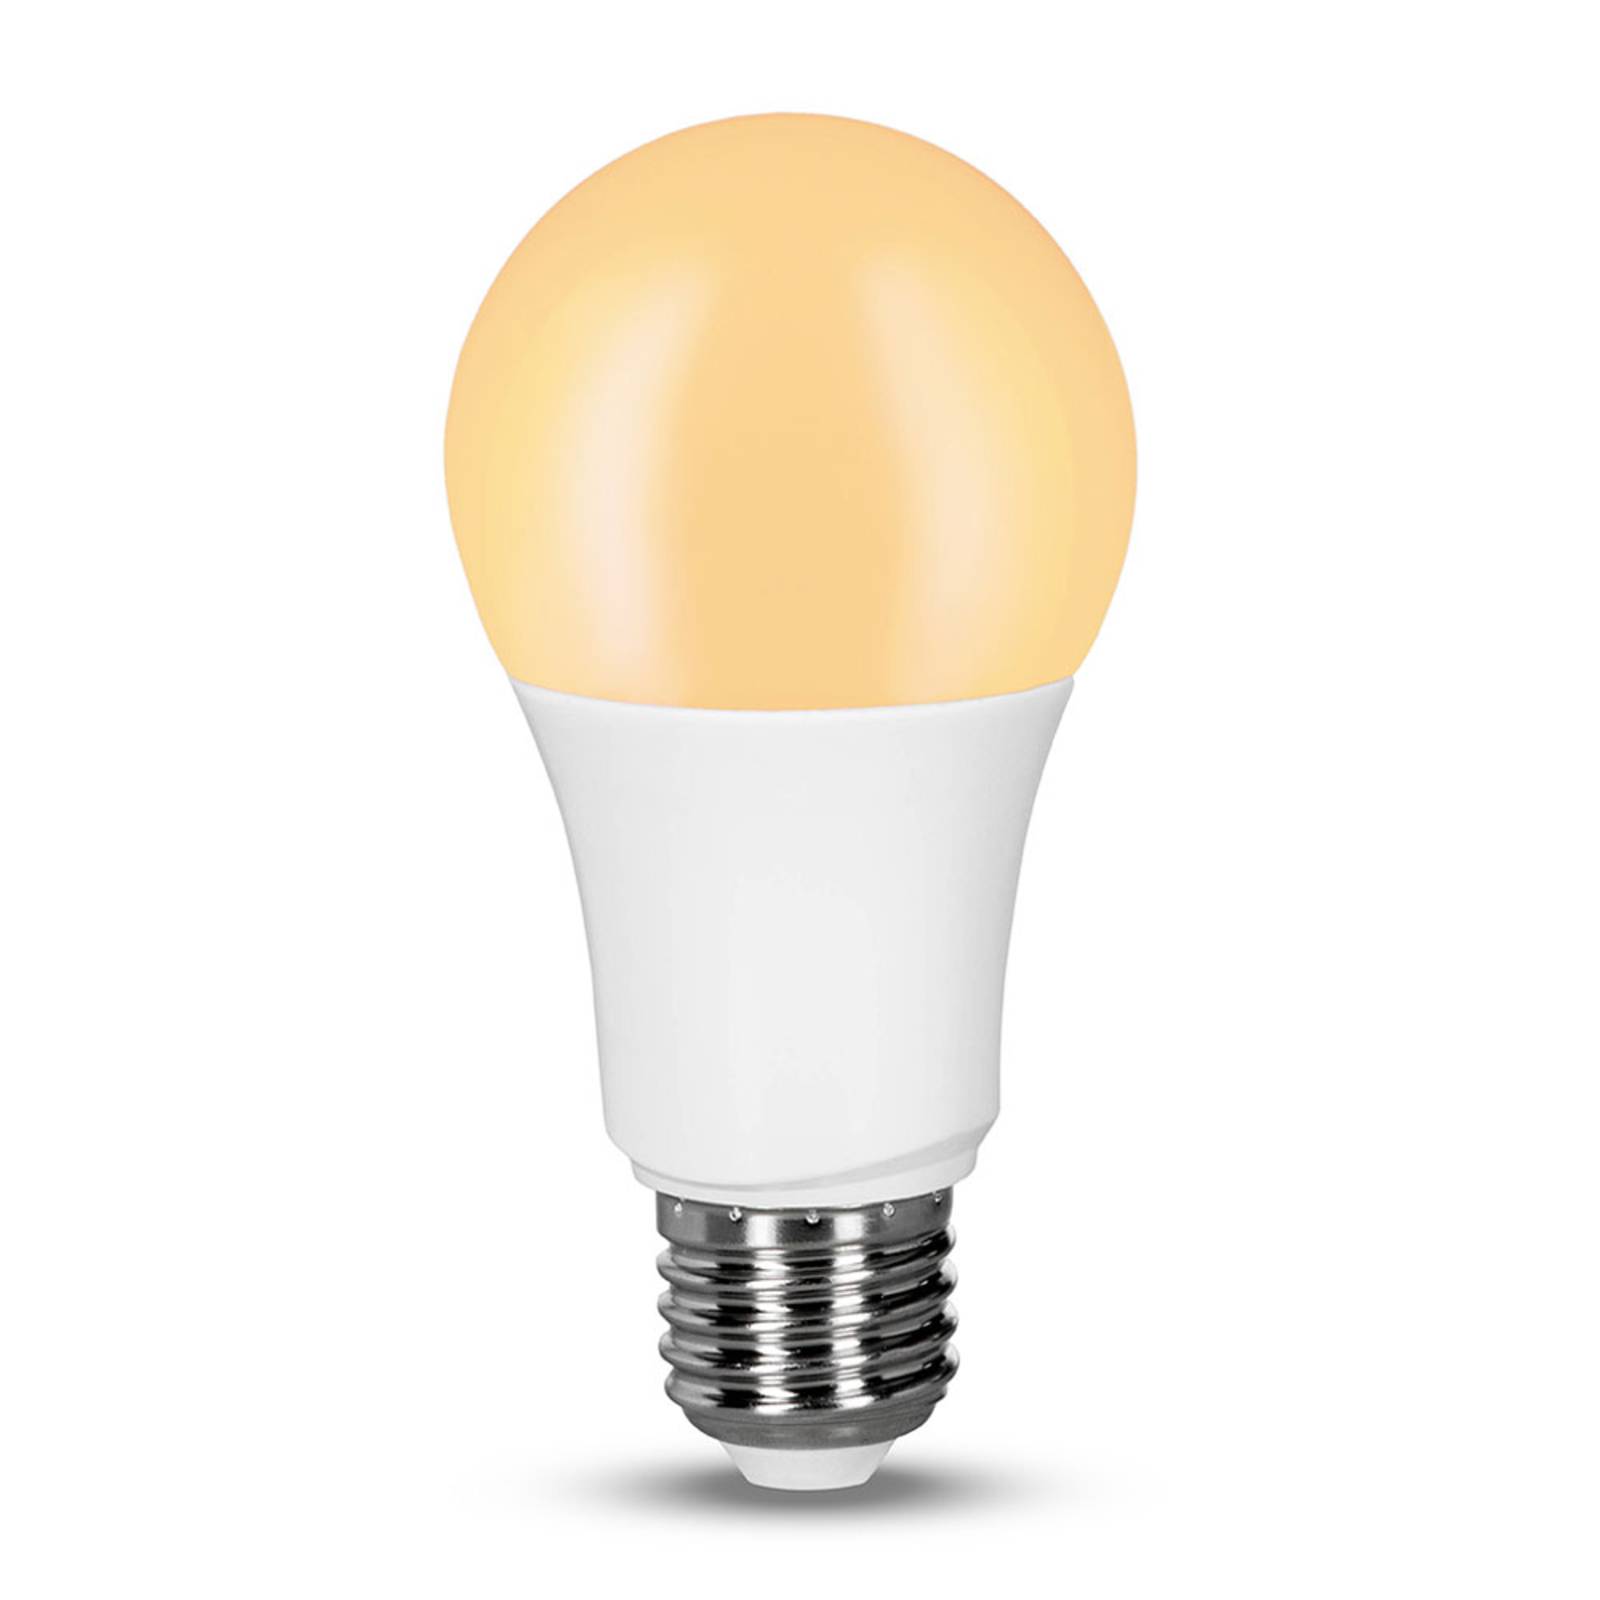 Müller Licht tint dimming LED-Lampe E27, 9W 2.700K